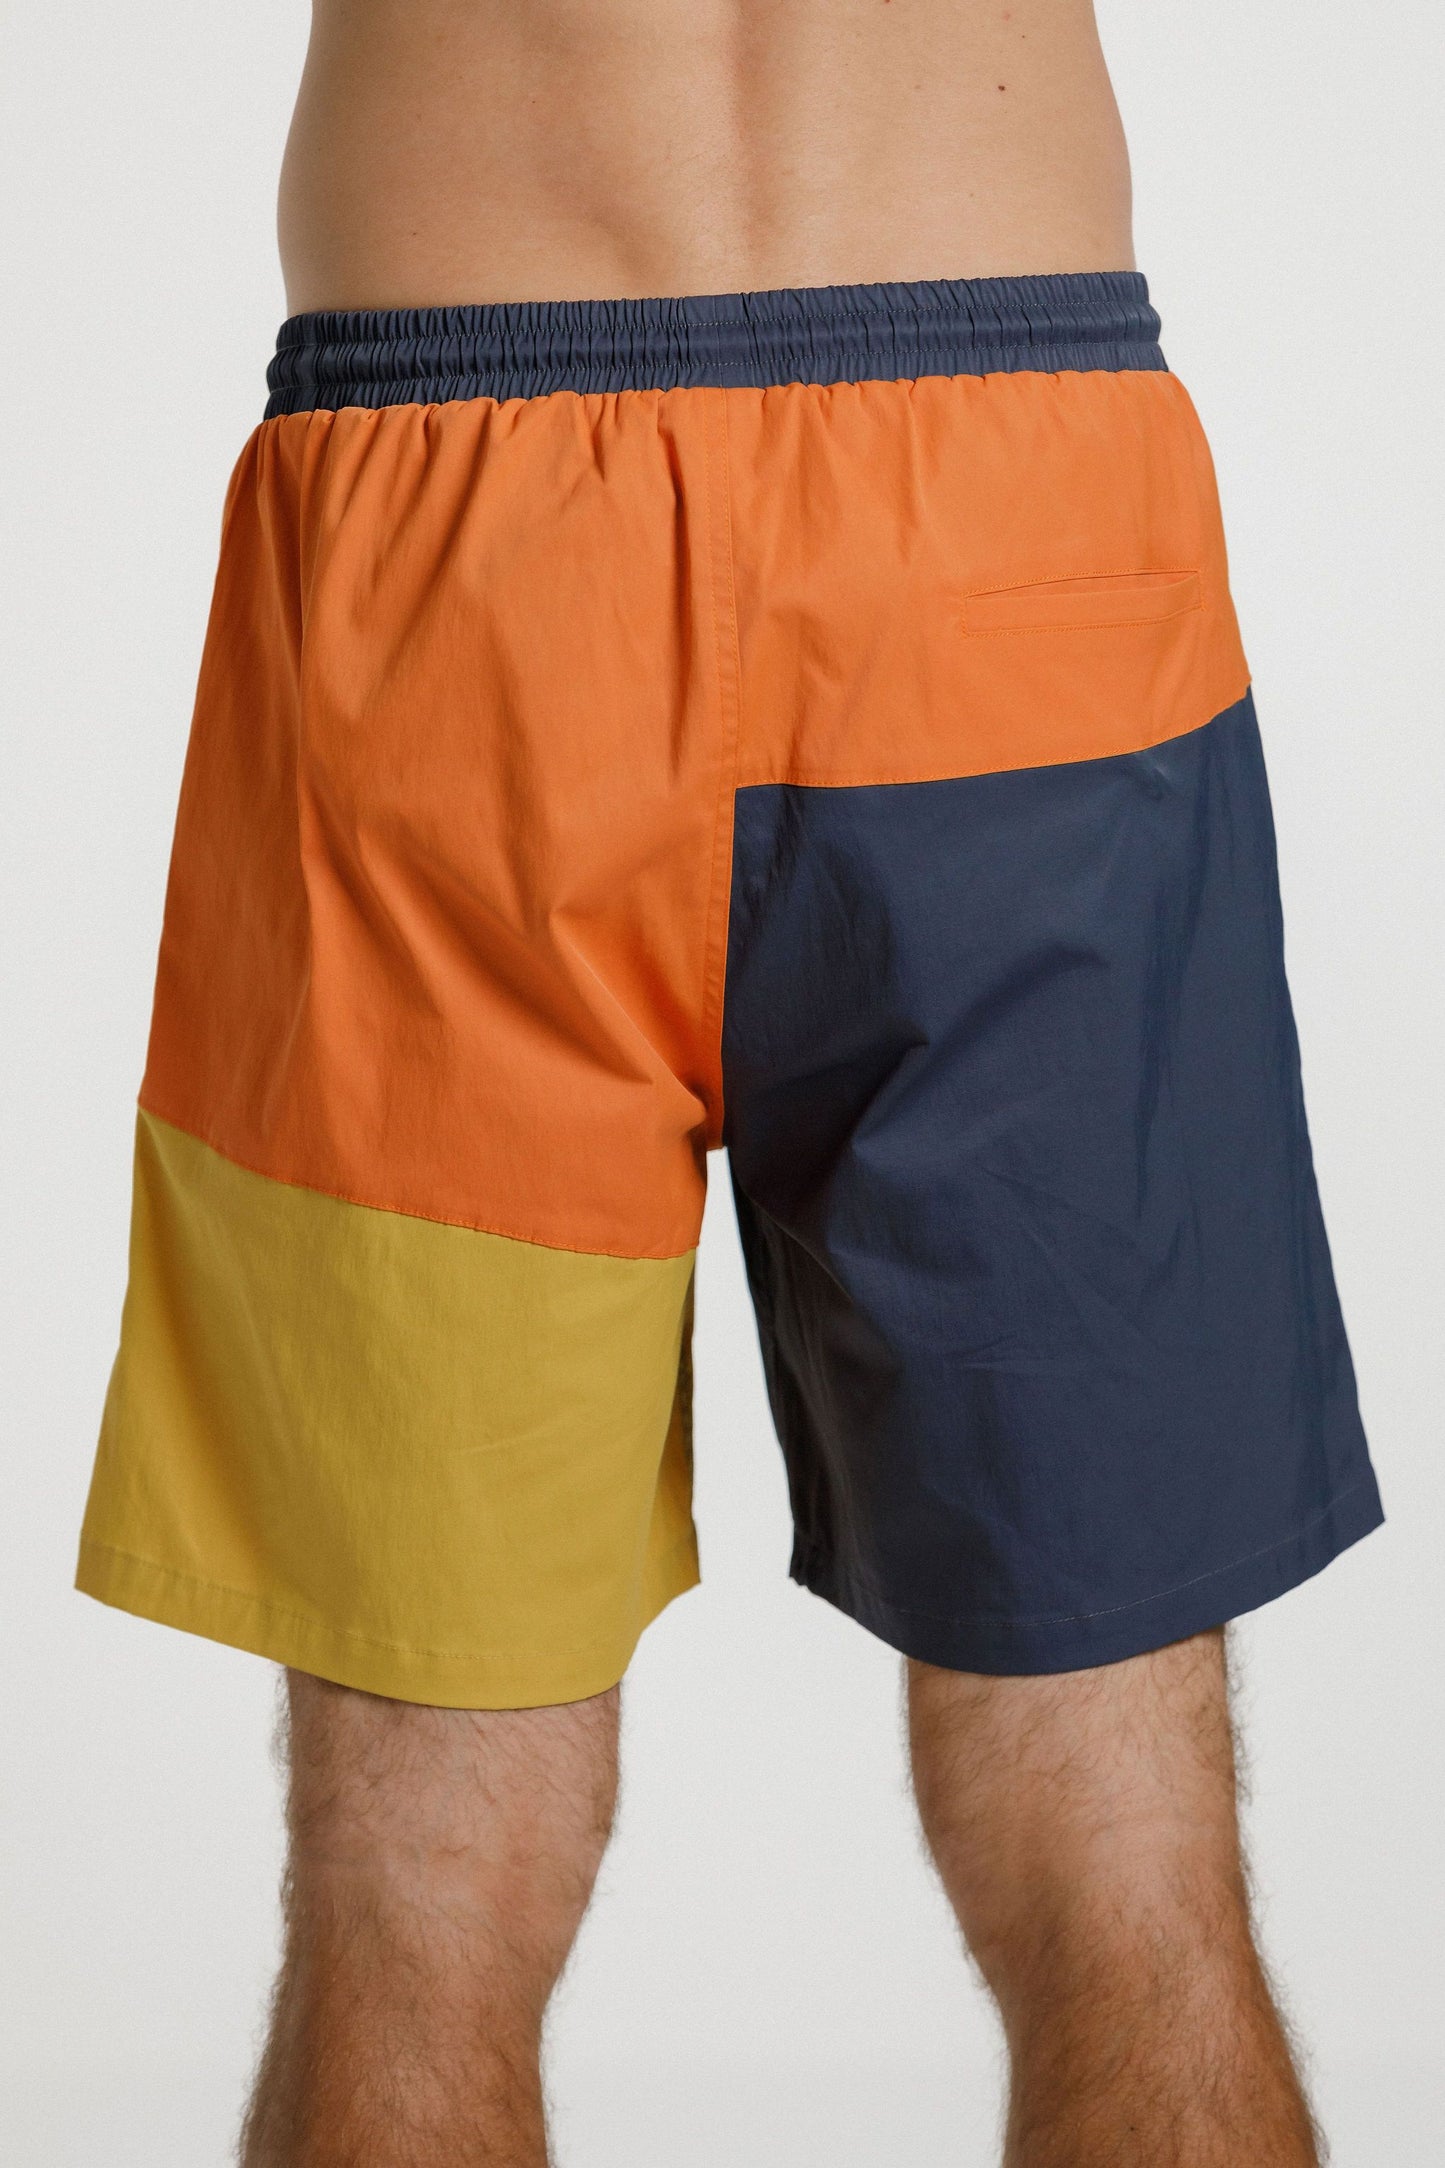 THING THING Wavy Shorts Slate/Orange/Yellow